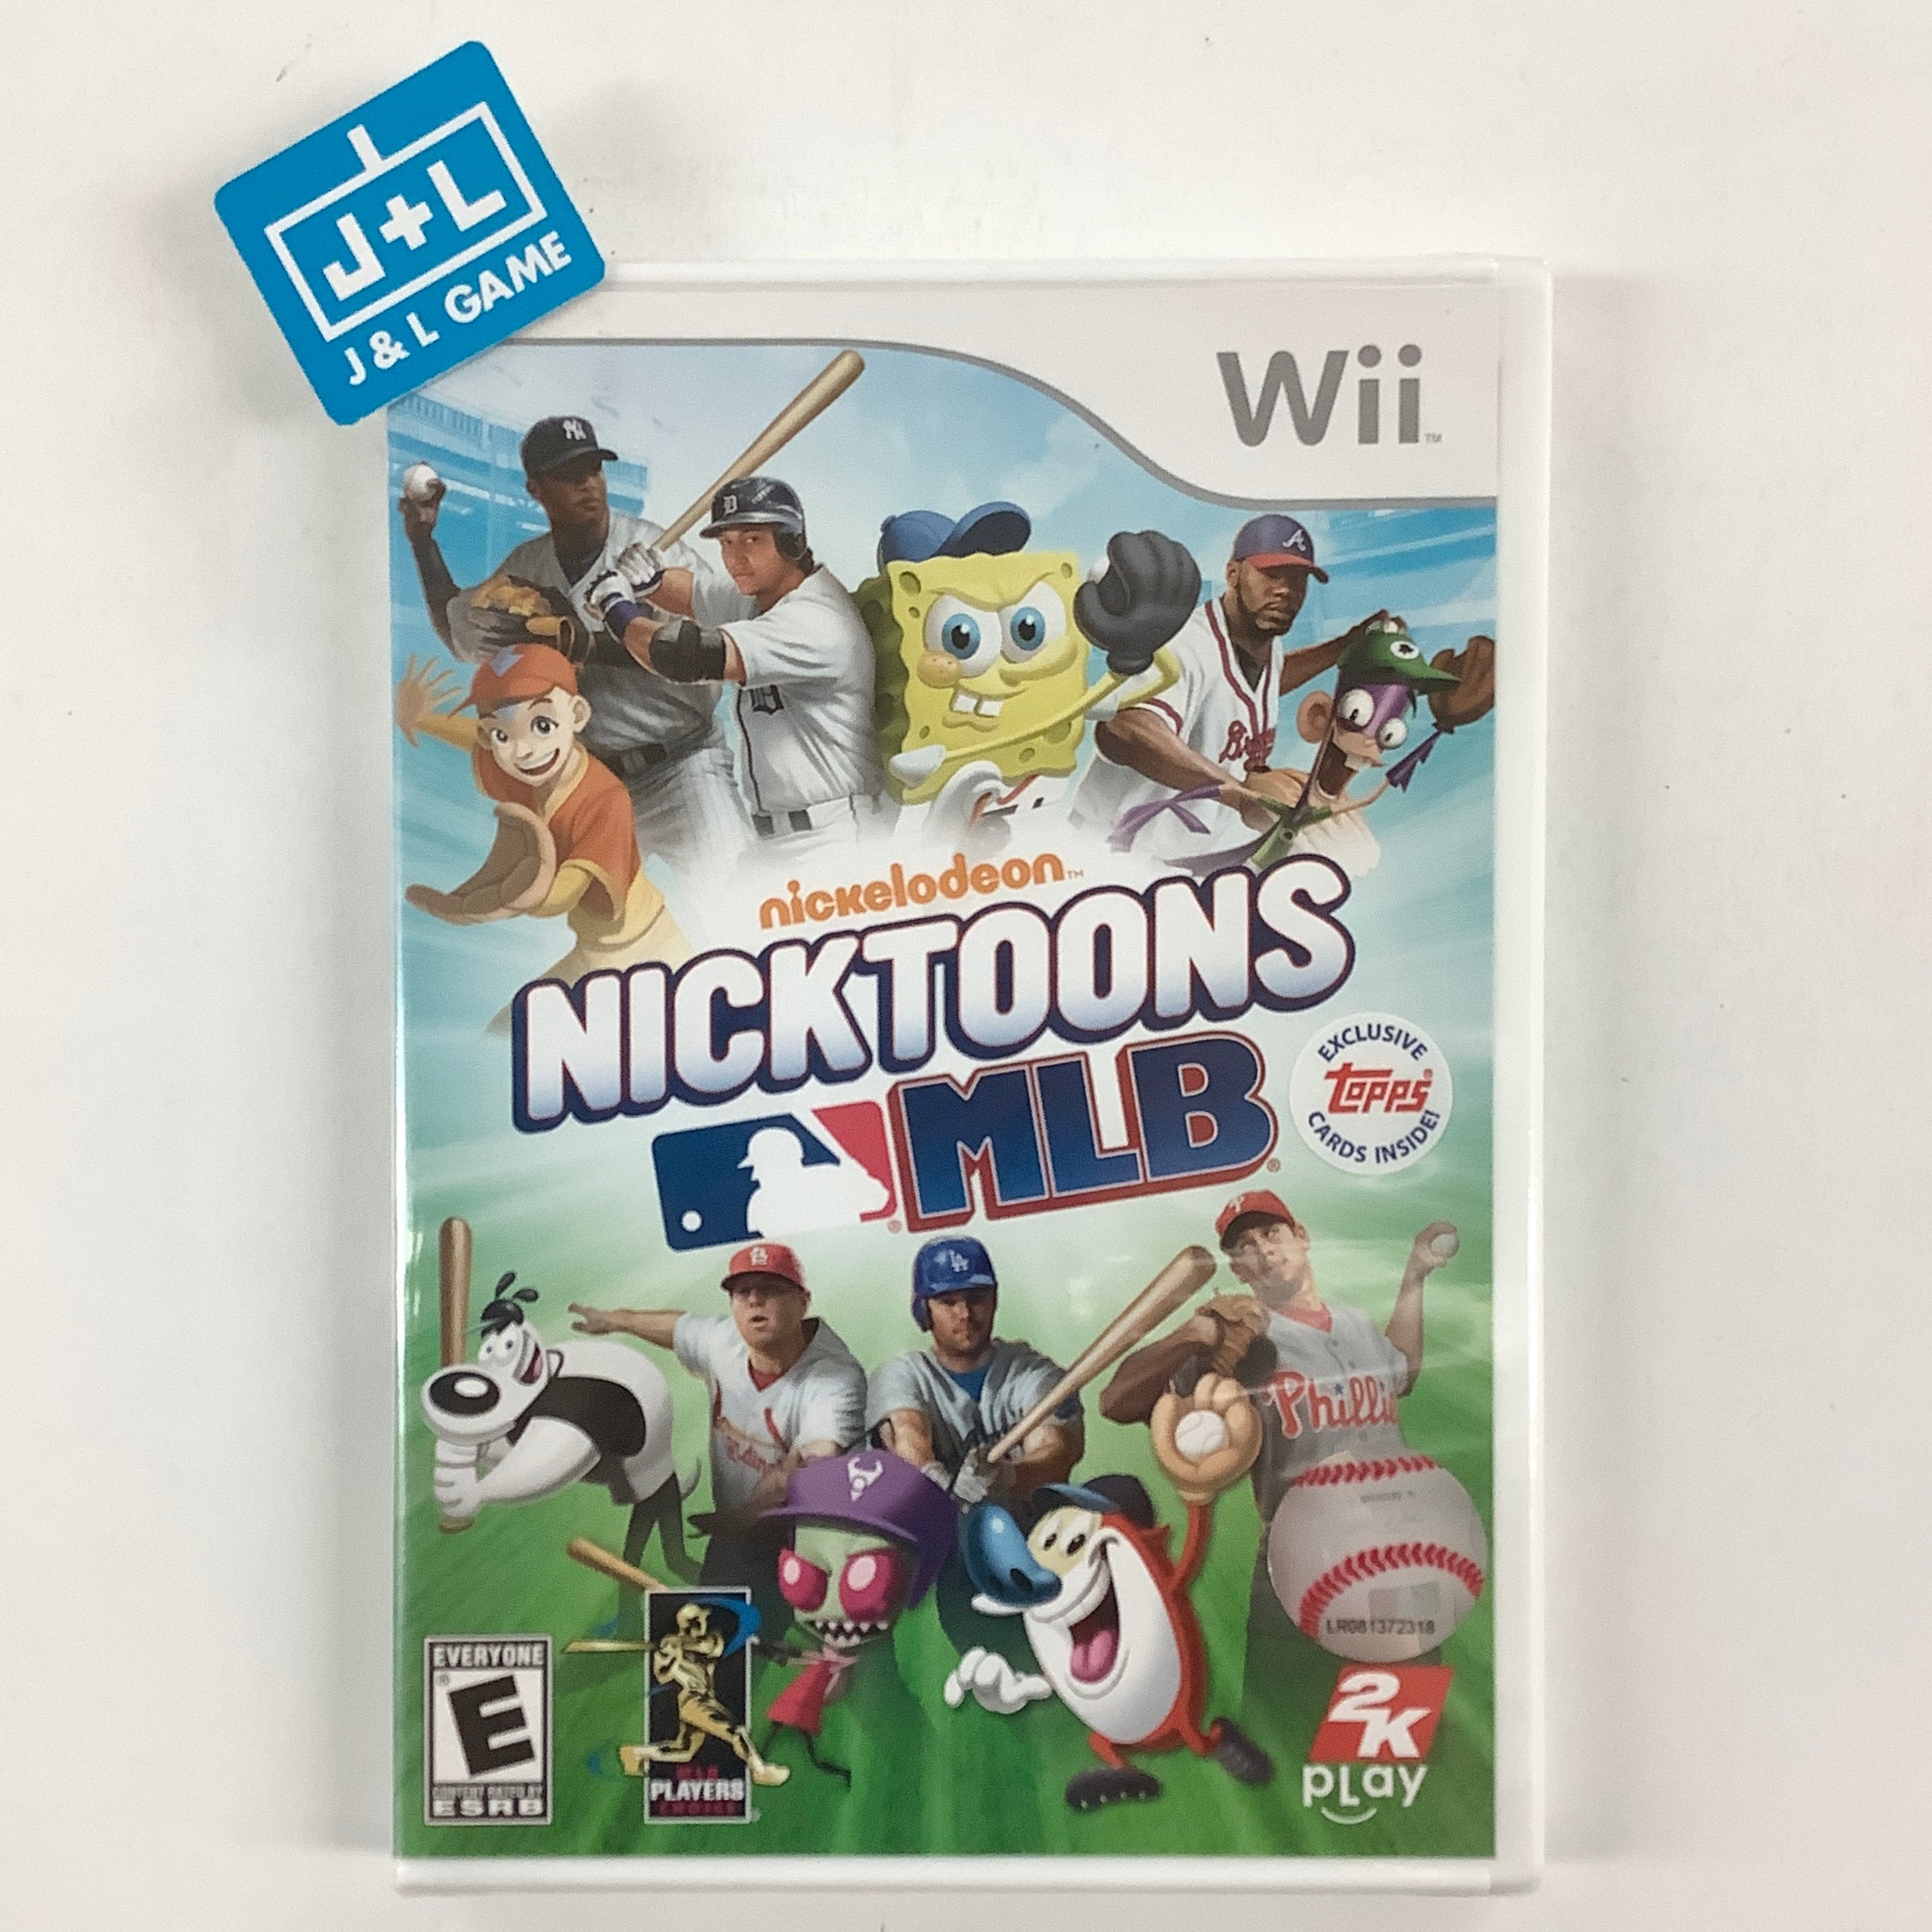 Nicktoons MLB - Nintendo Wii Video Games 2K Games   